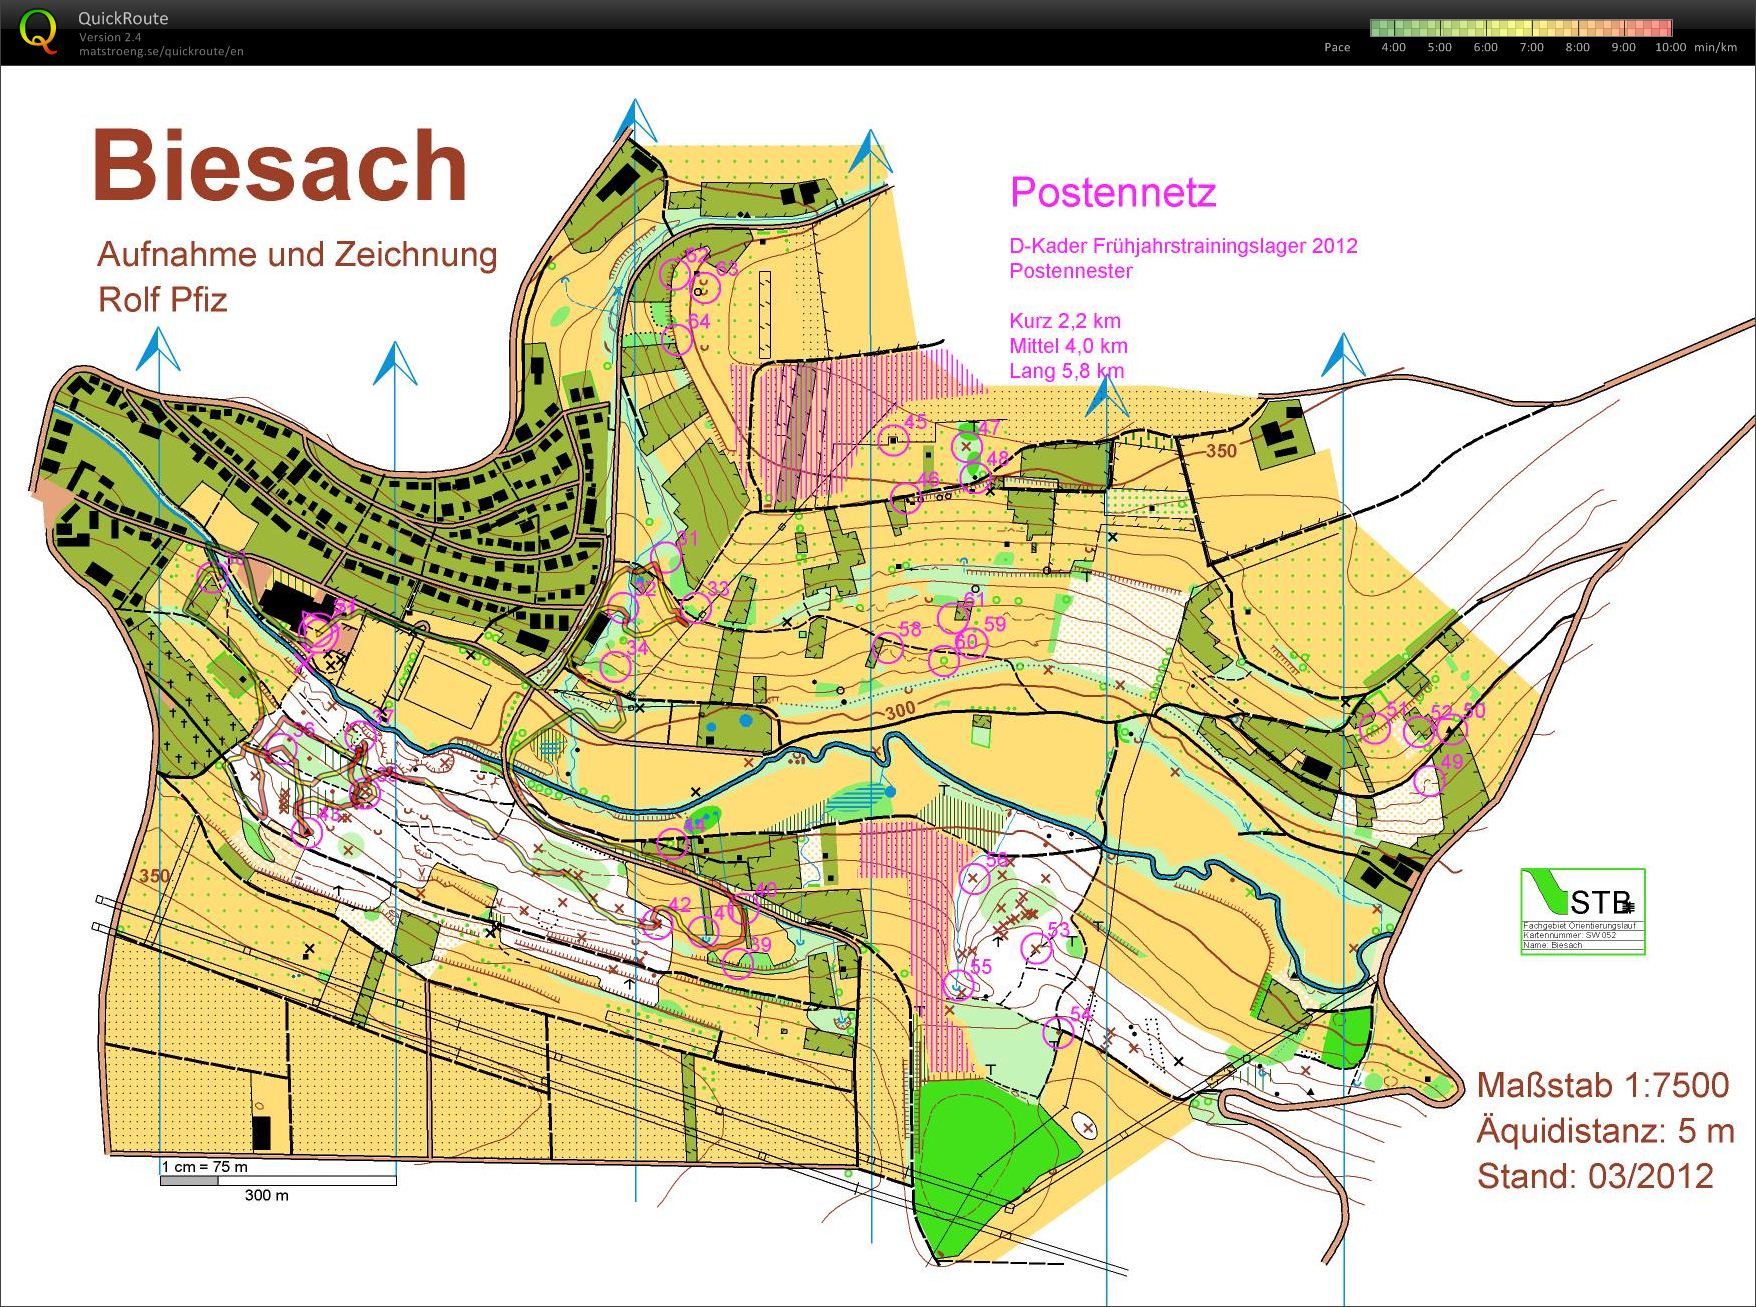 Training Biesach (Schatten) (24.03.2012)